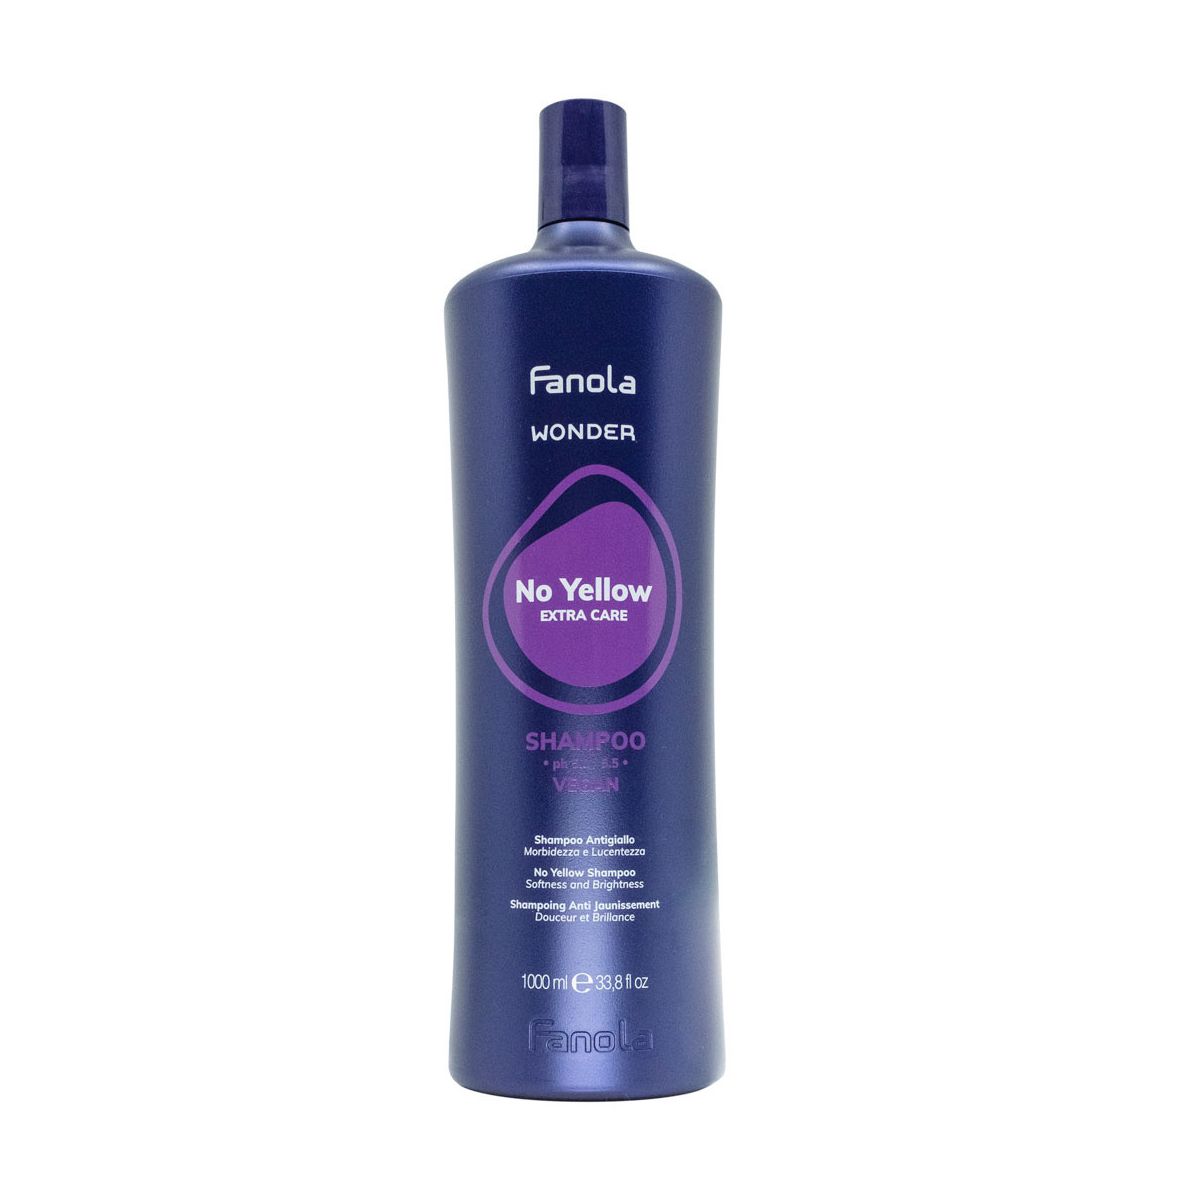 FANOLA WONDER No Yellow Extra Care Shampoo Vegan 1000 ml